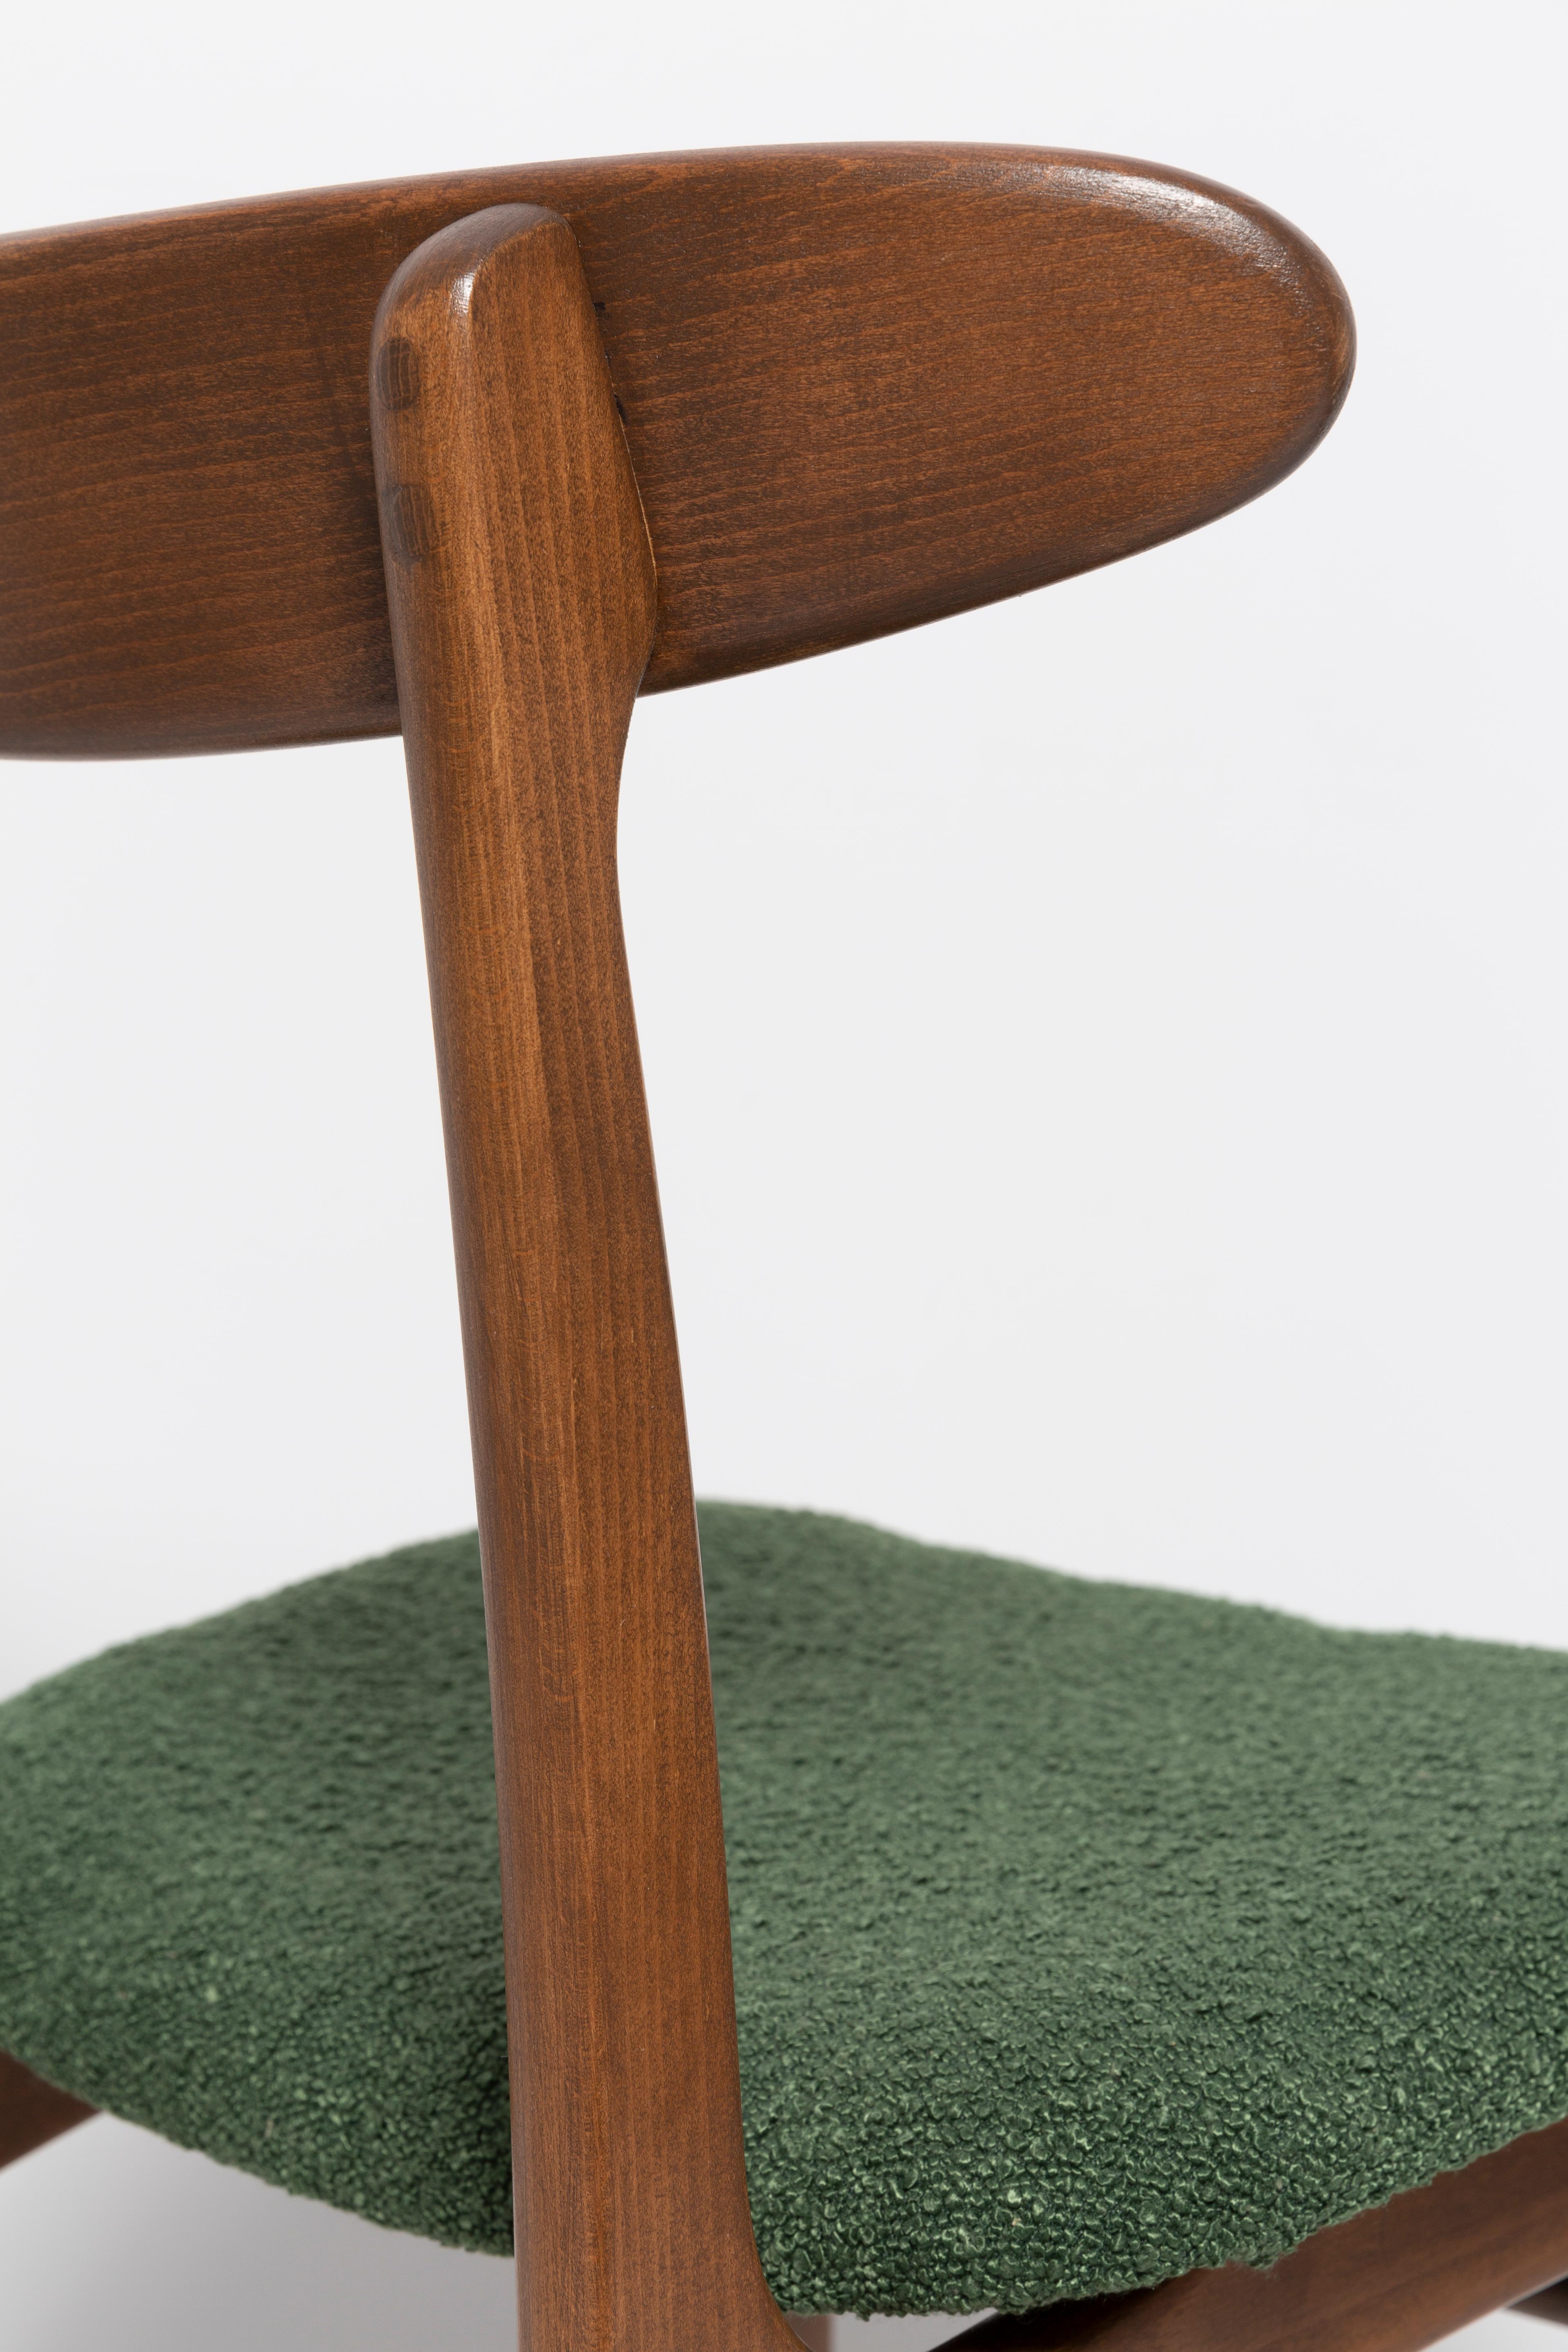 Mid Century Green Boucle Chair, Walnut Wood, Rajmund Halas, Poland, 1960s For Sale 1